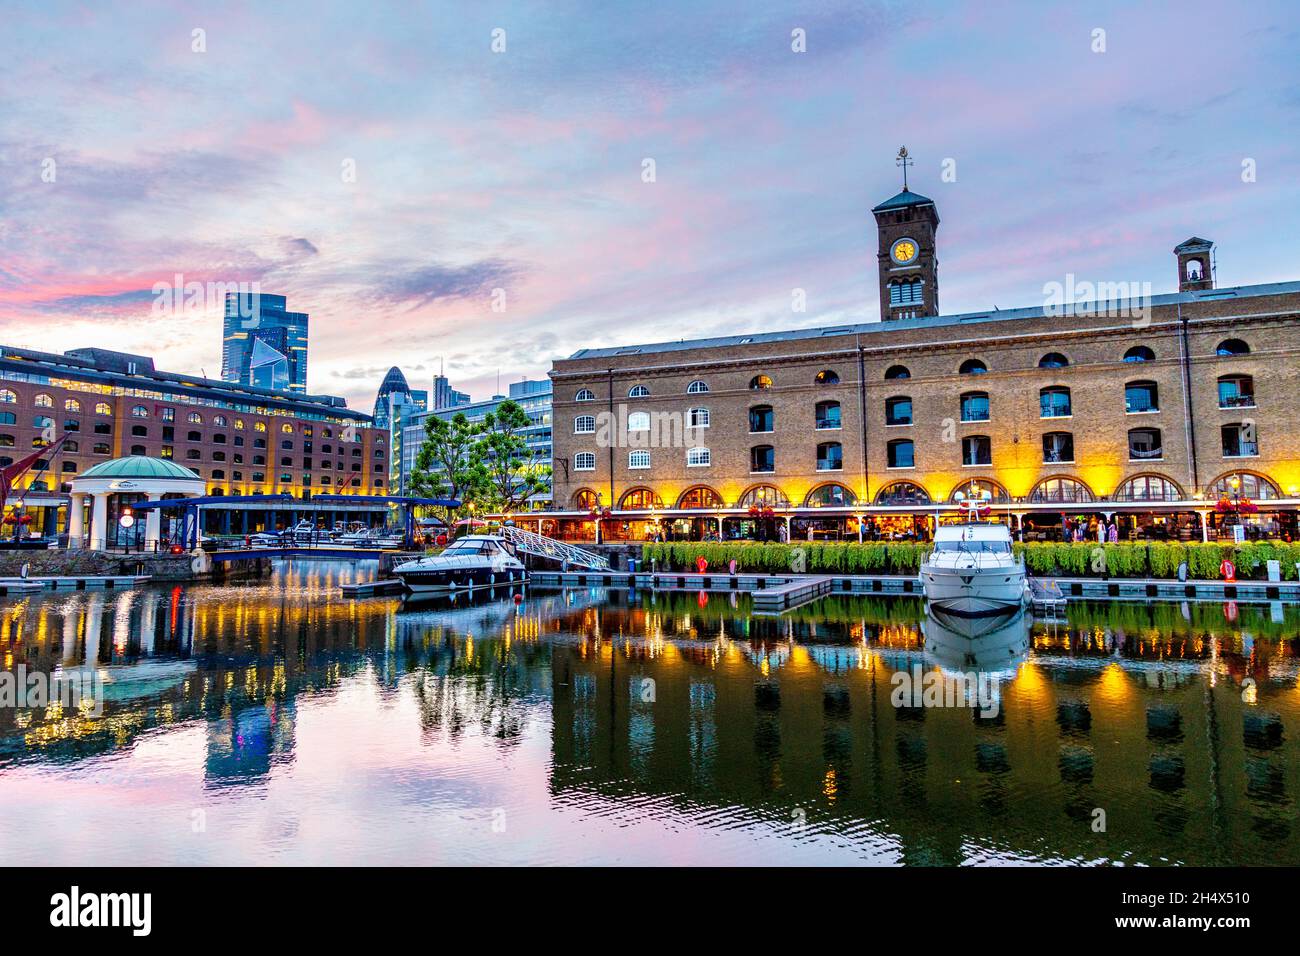 Marina surrounded by converted warehouses at evening time, St Katharine Docks, London, UK Stock Photo